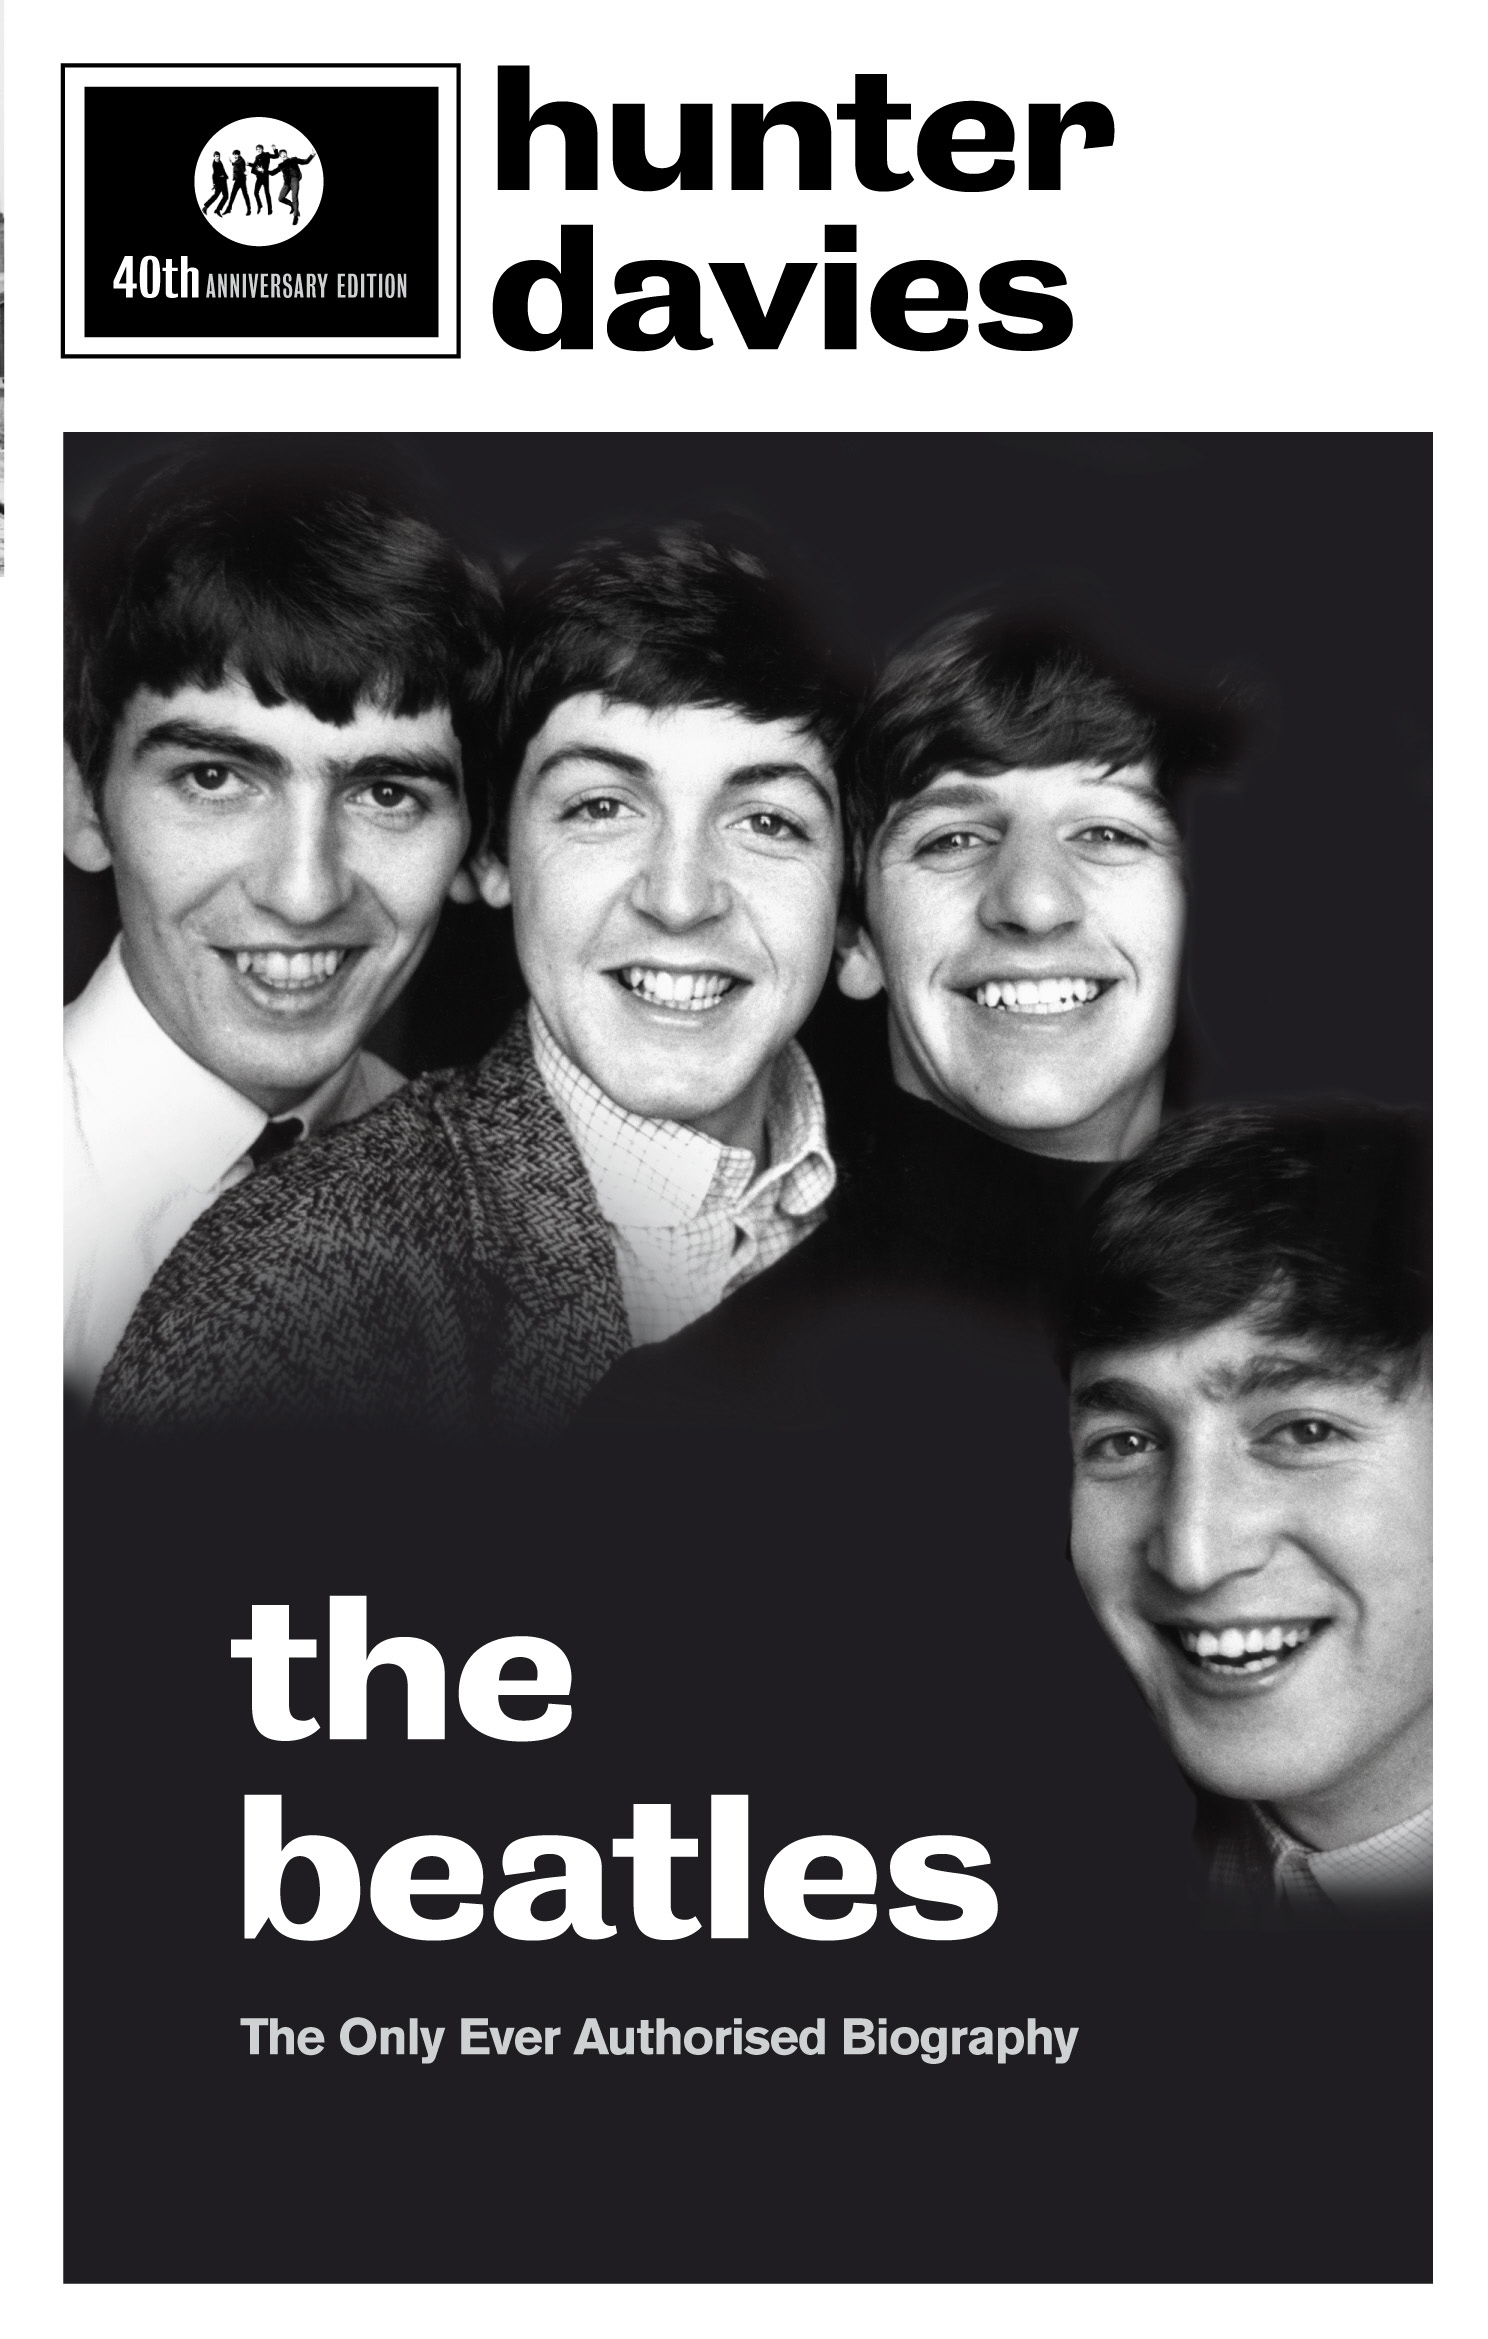 The Beatles by Hunter Davies Penguin Books Australia